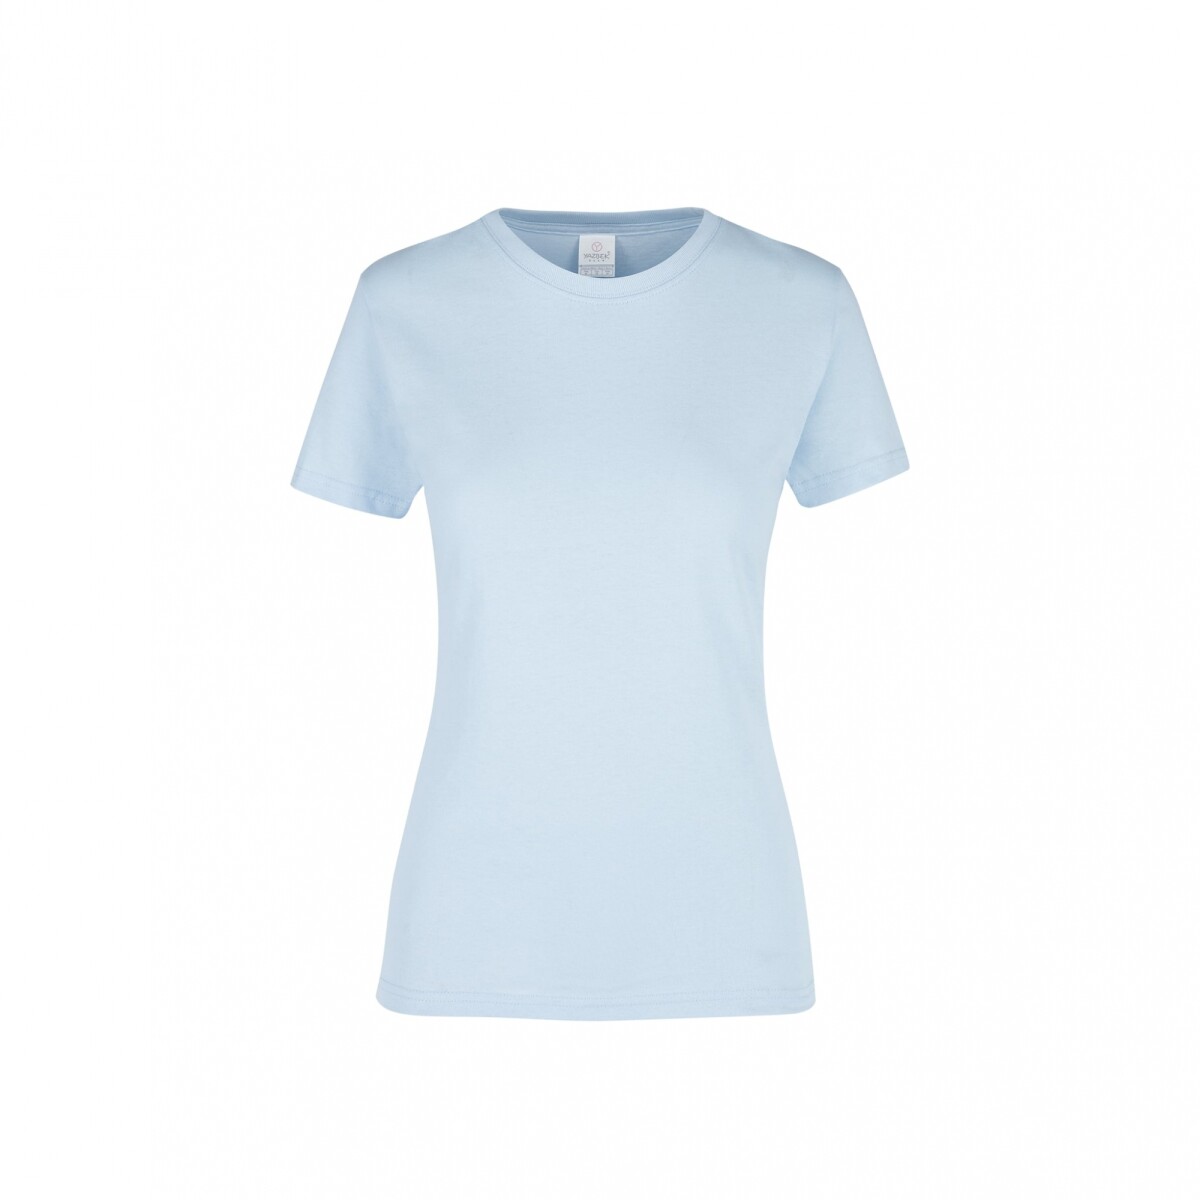 Camiseta a la base dama - Azul claro 